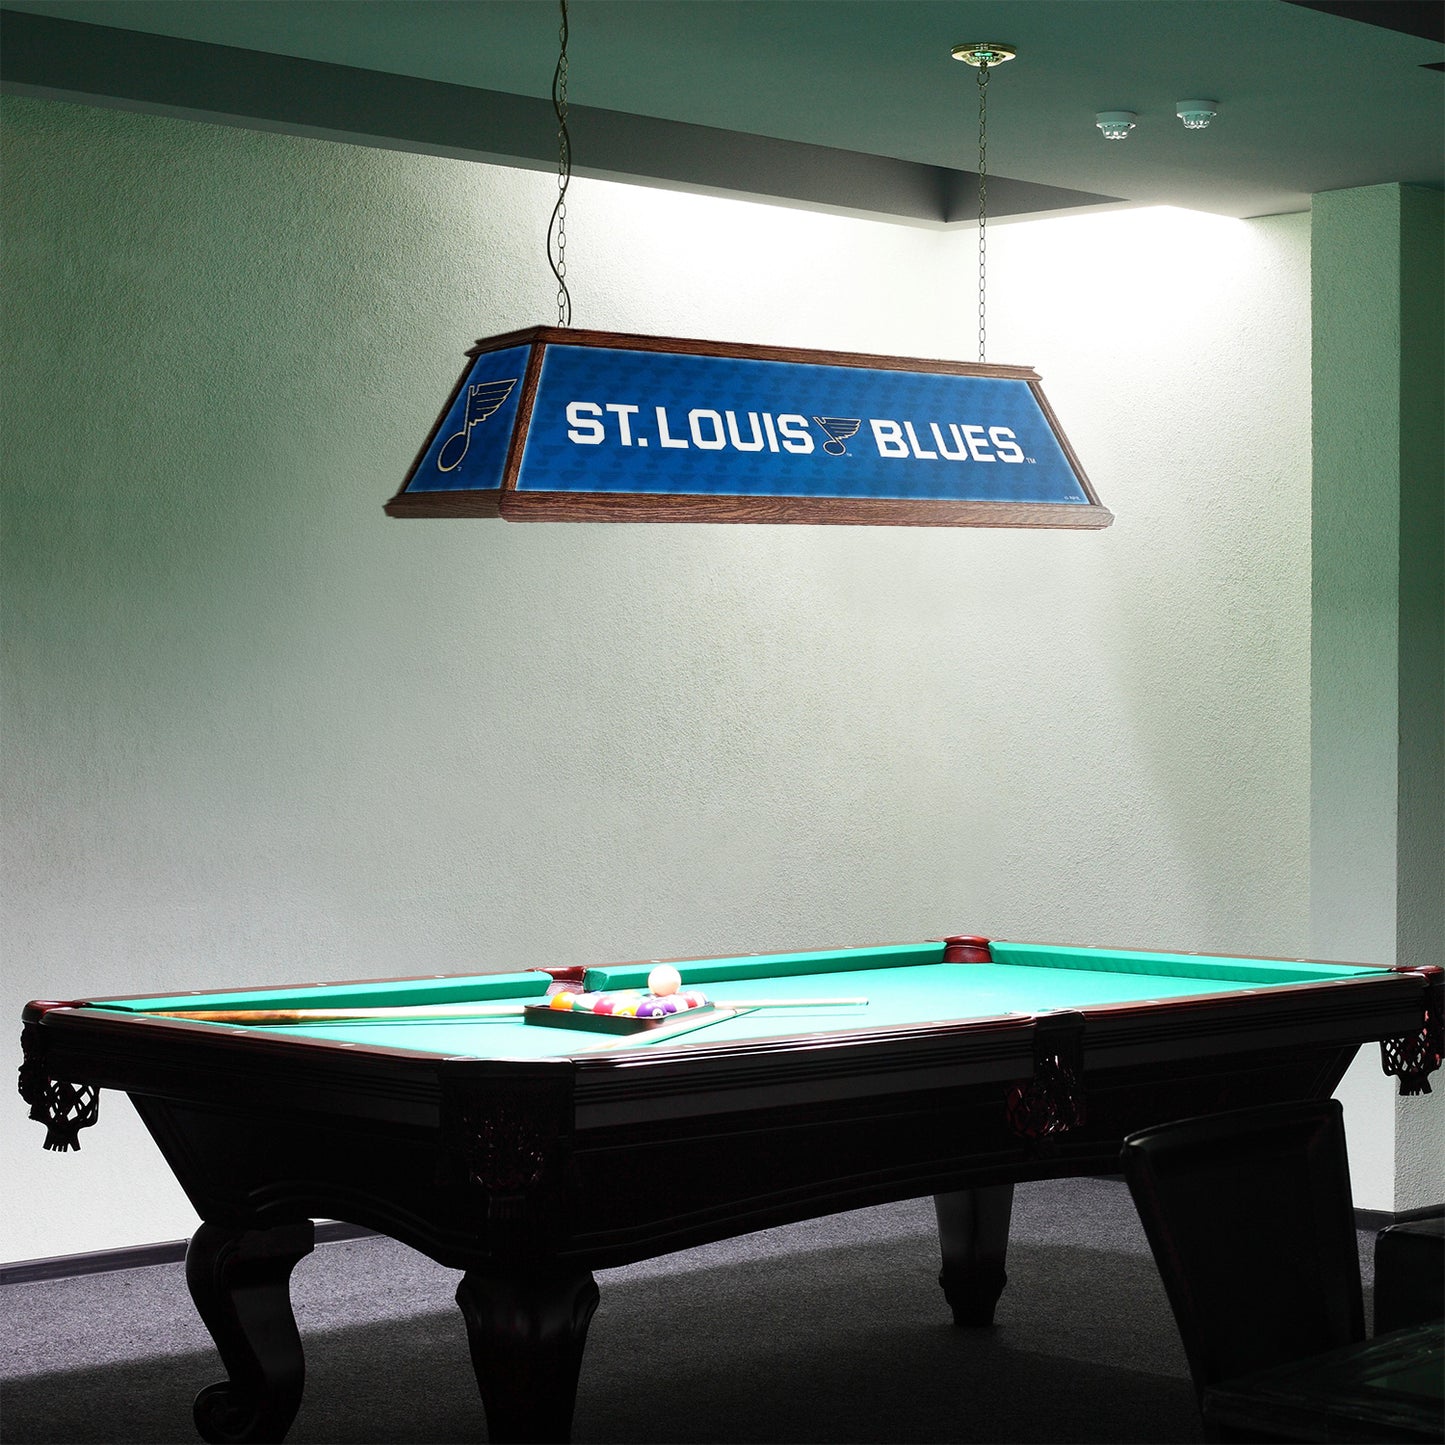 St. Louis Blues Premium Pool Table Light Room View